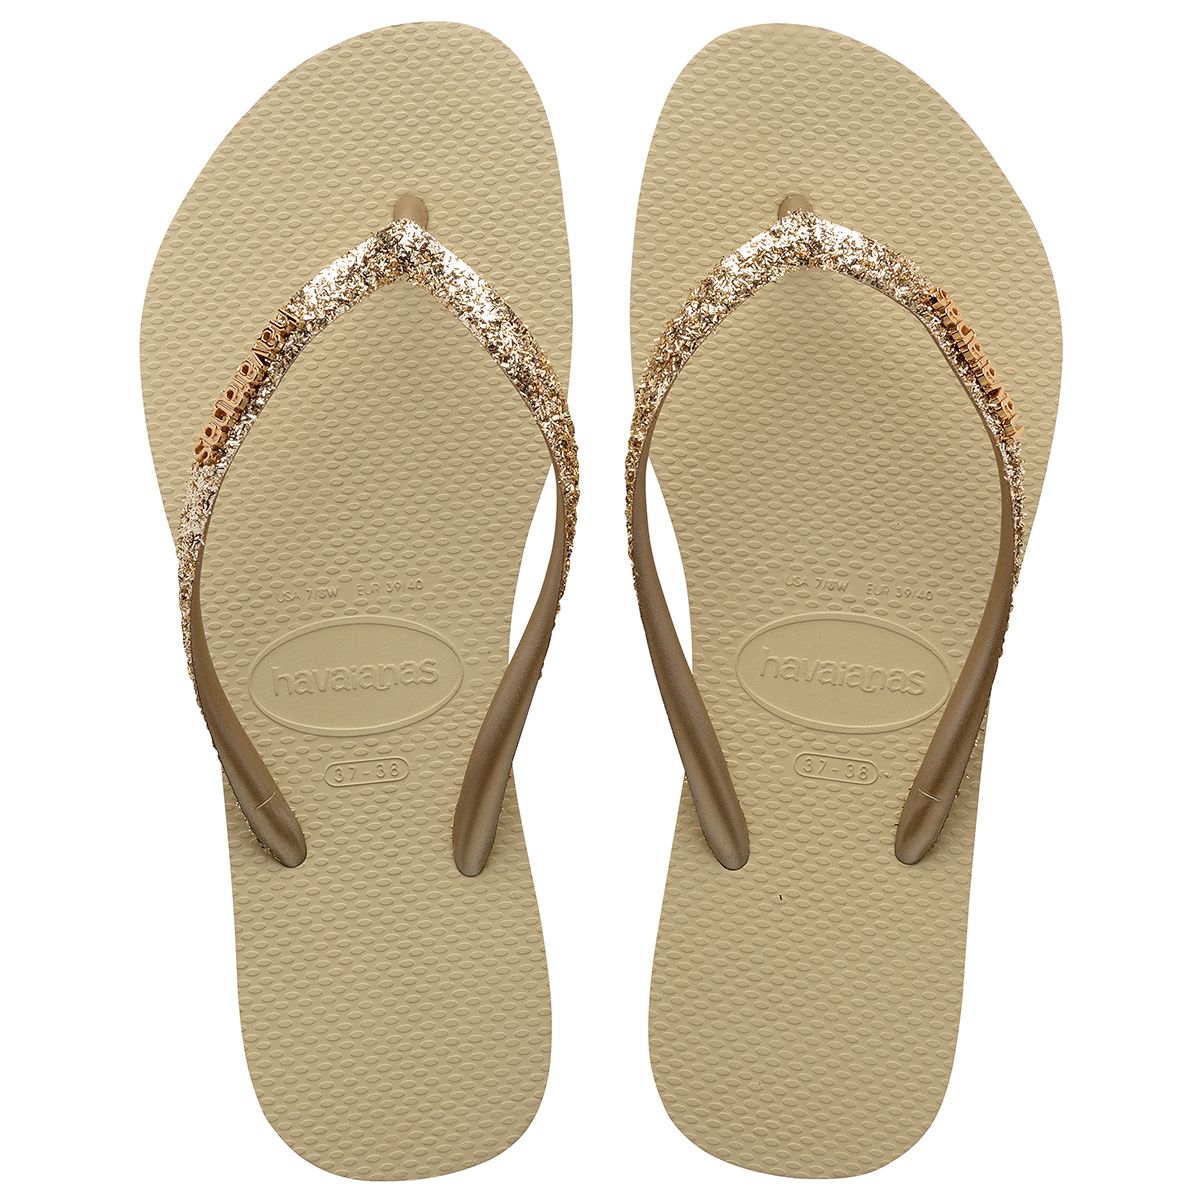 Havaianas Slim Glitter 2 Womens Sandal 0154-Sand Grey 11